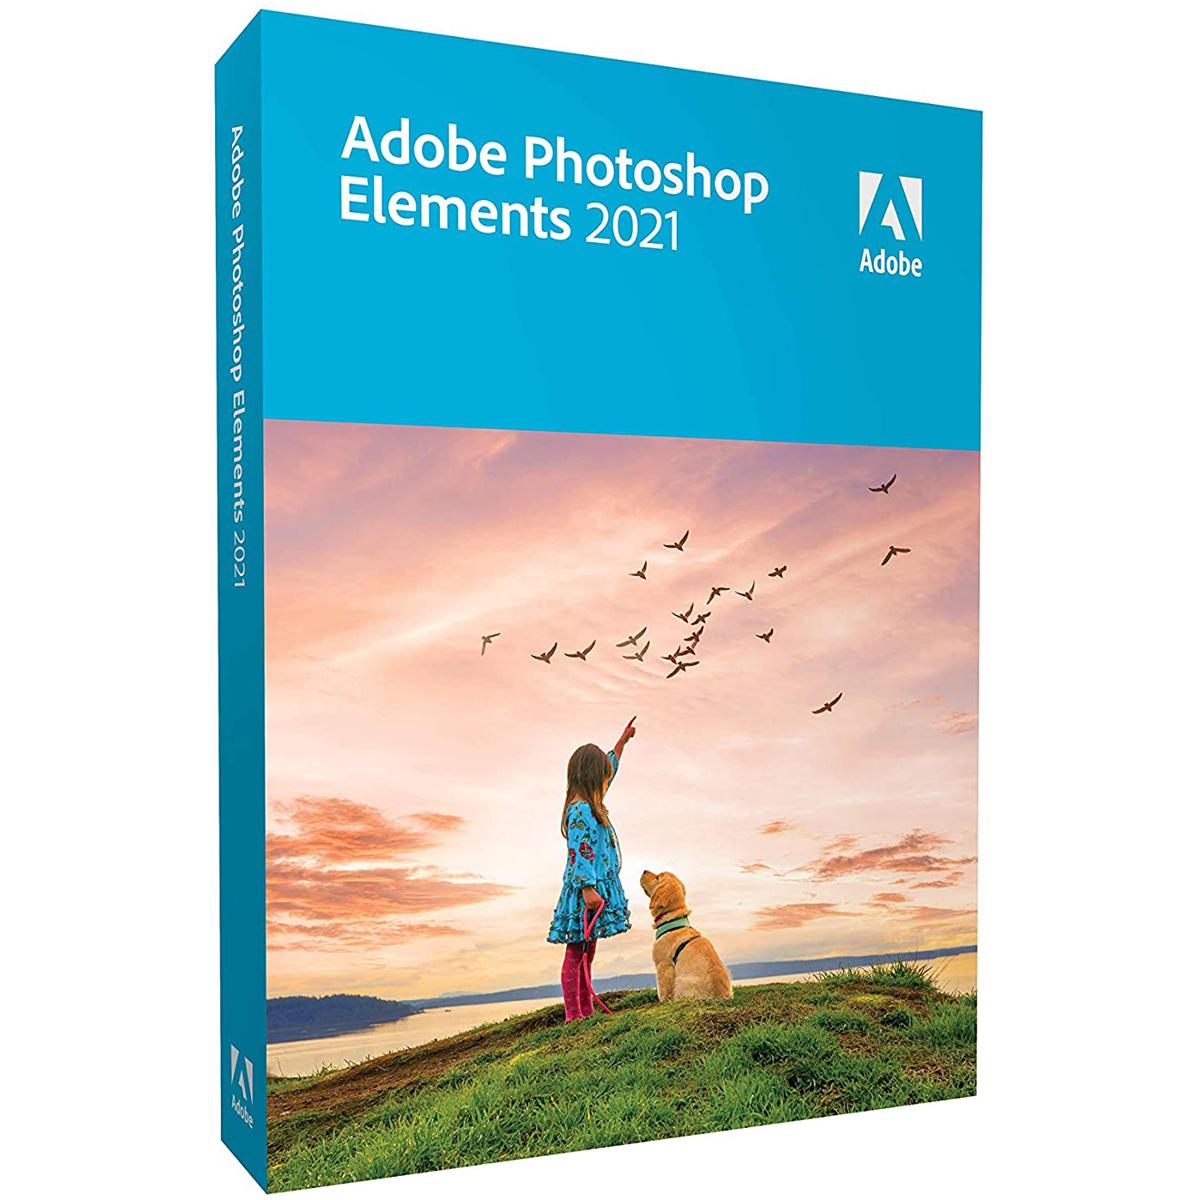 Adobe Photoshop Elements 2021 Deals